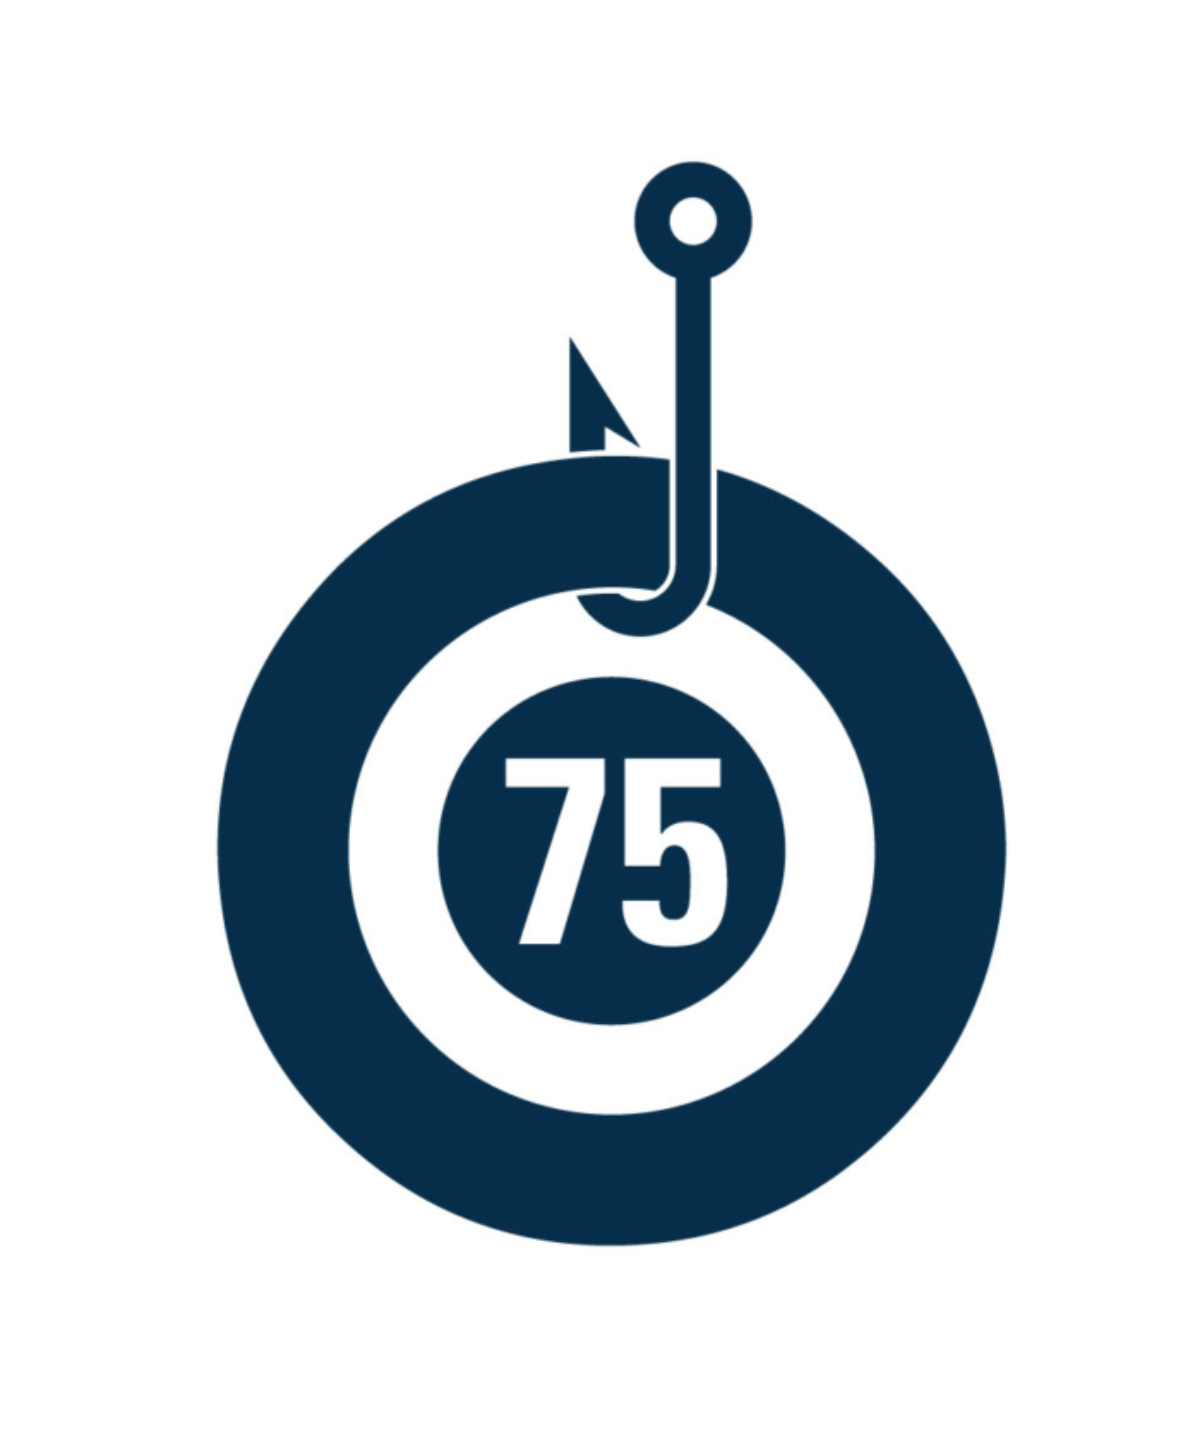 T75ロゴ